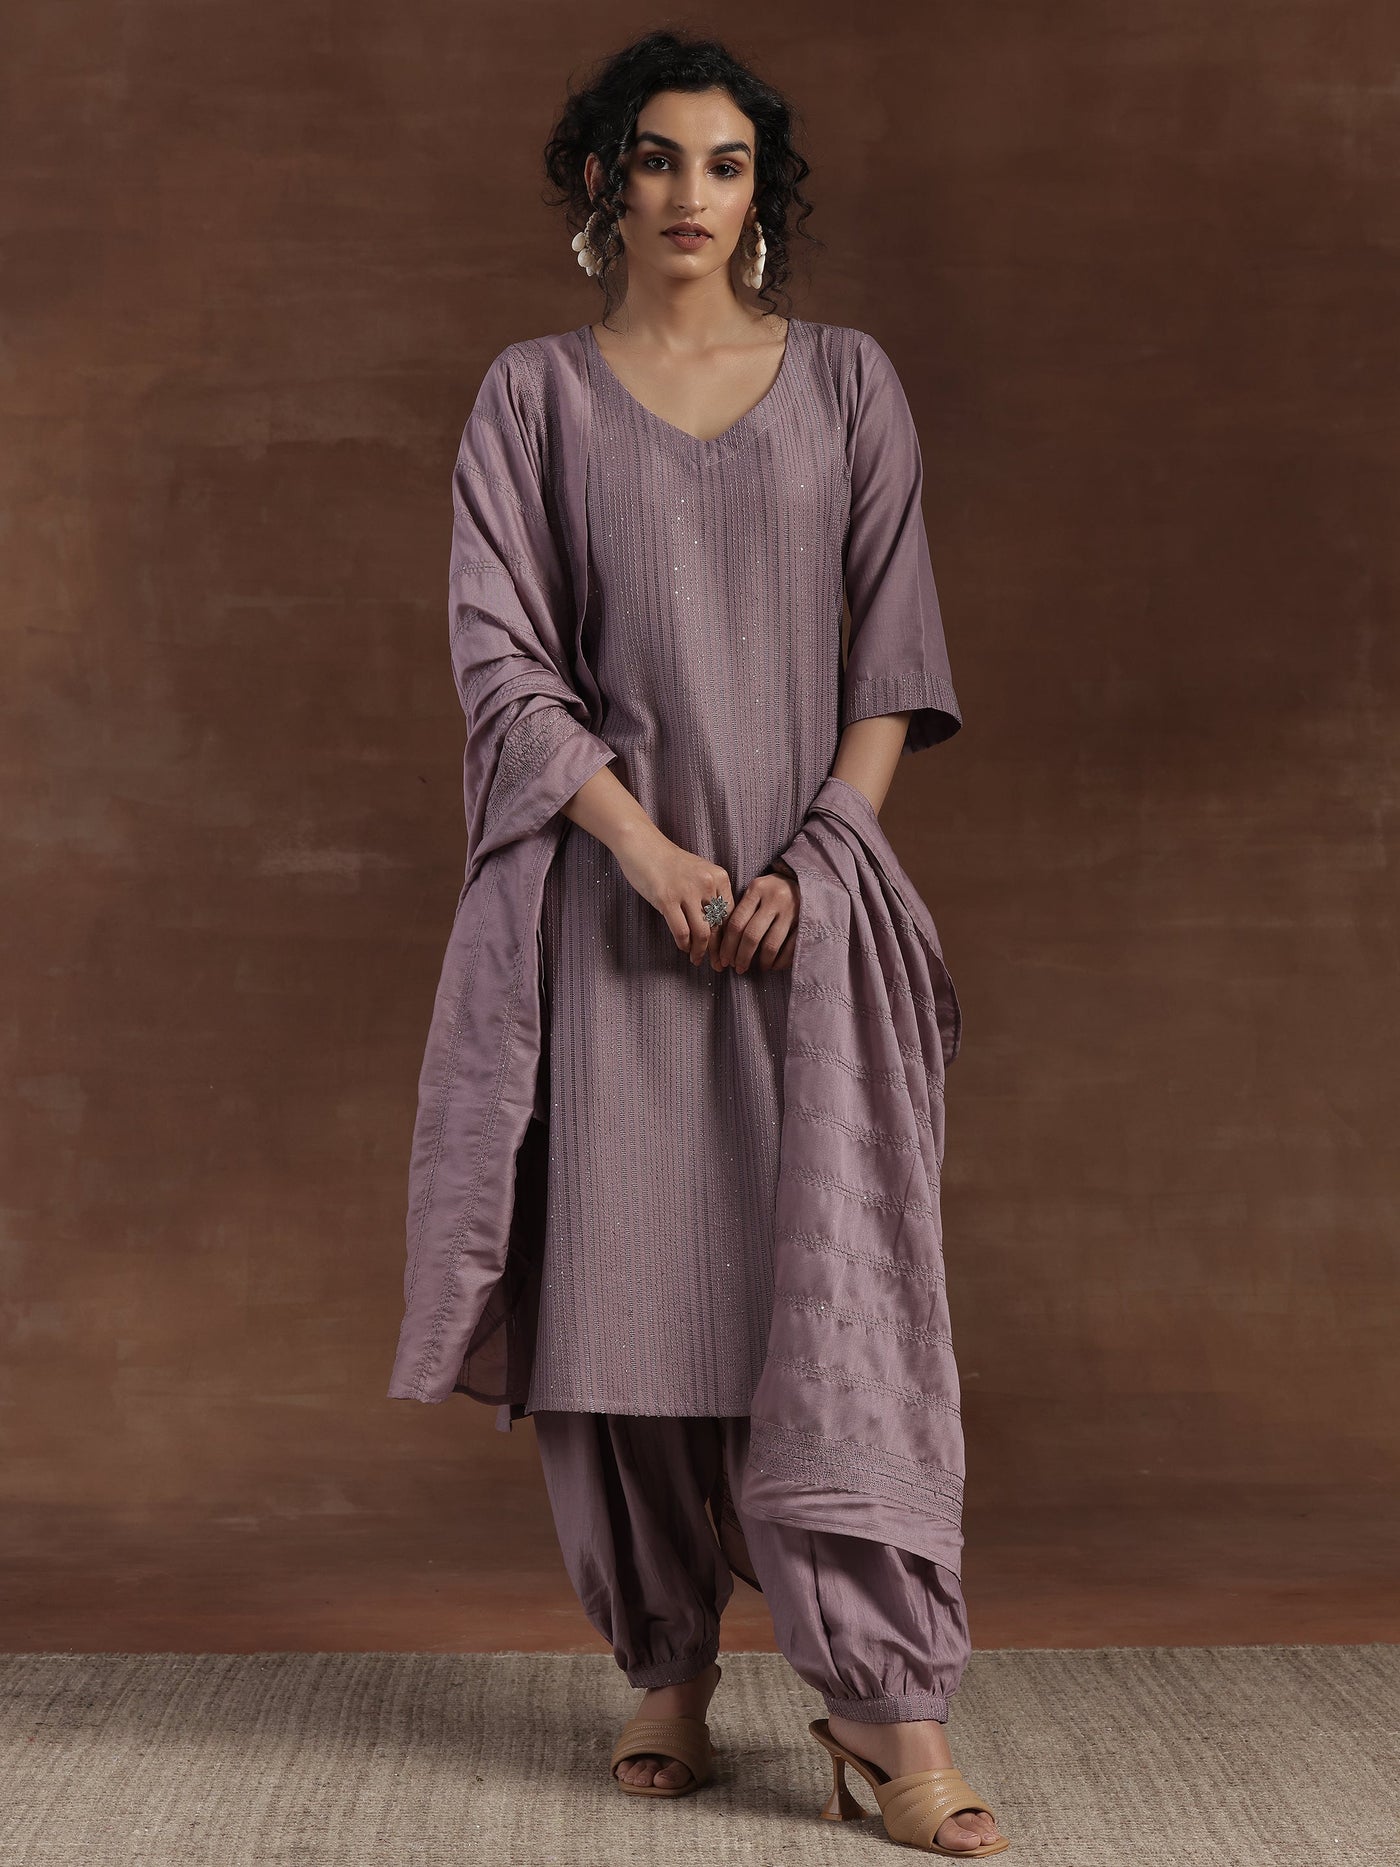 Mauve Self Design Silk Blend Straight Suit With Dupatta